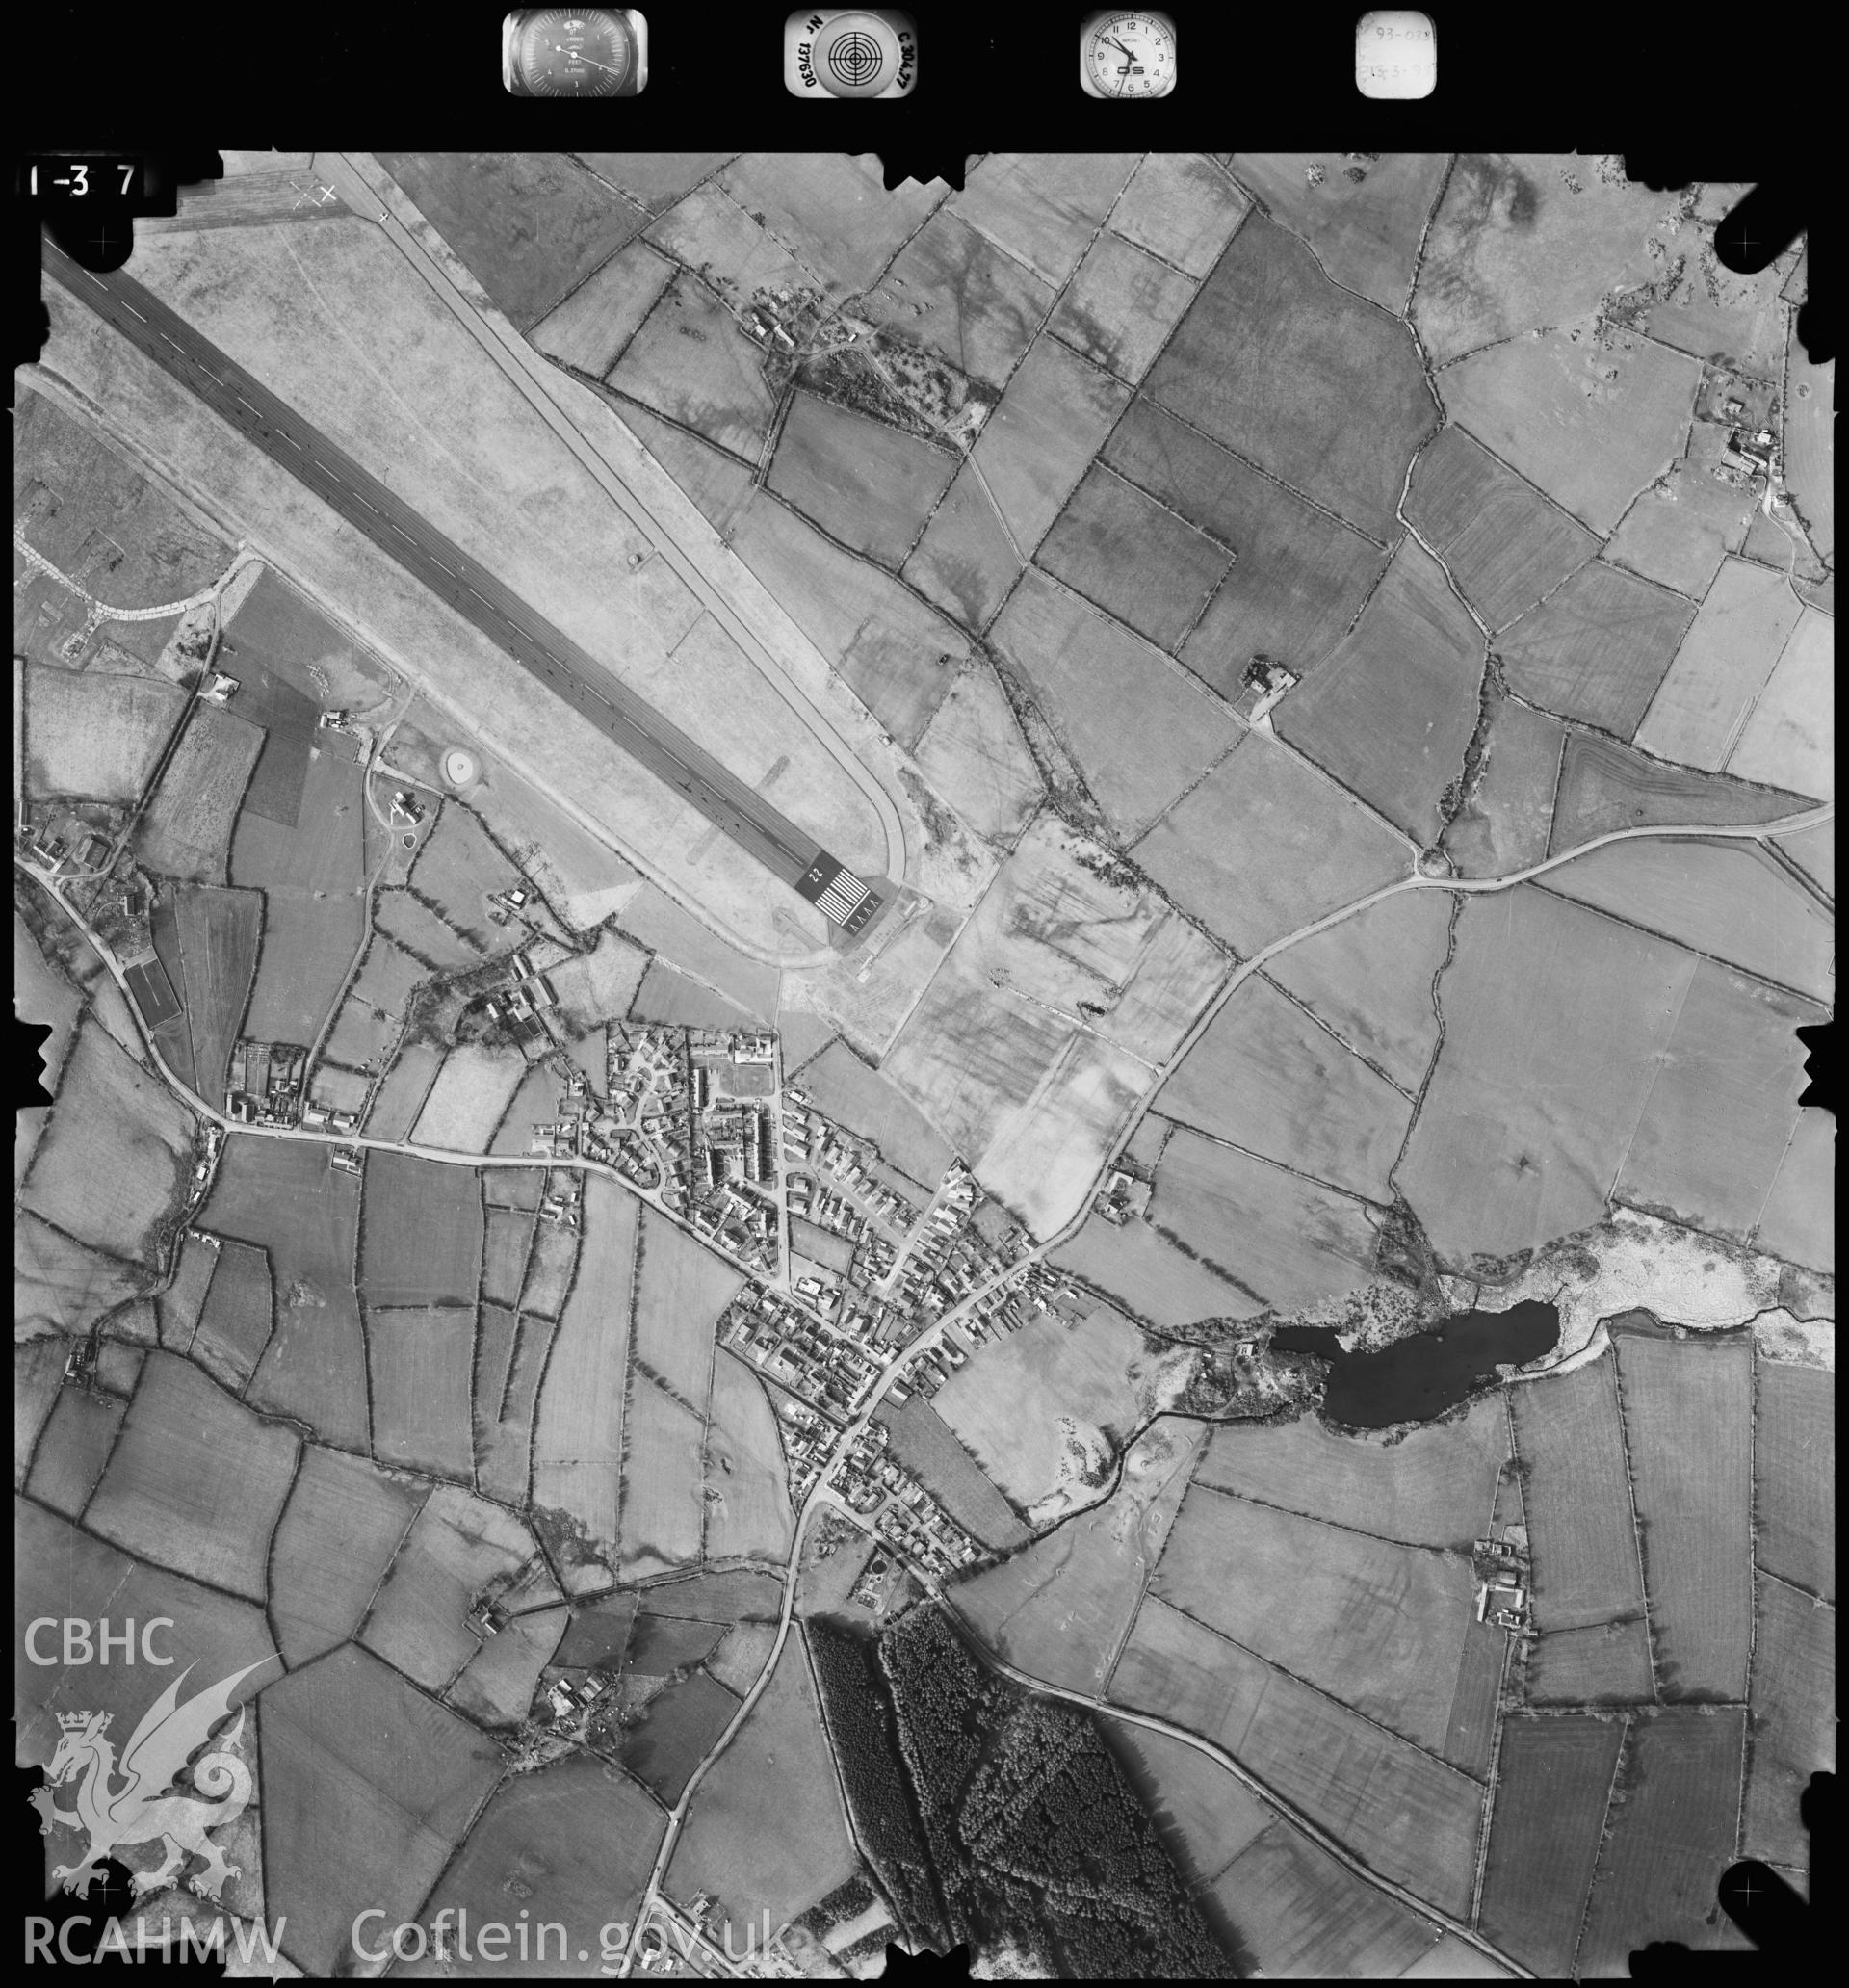 Digitized copy of an aerial photograph showing Felin Frogwy area, Bodfwrdd taken by Ordnance Survey, 1993.